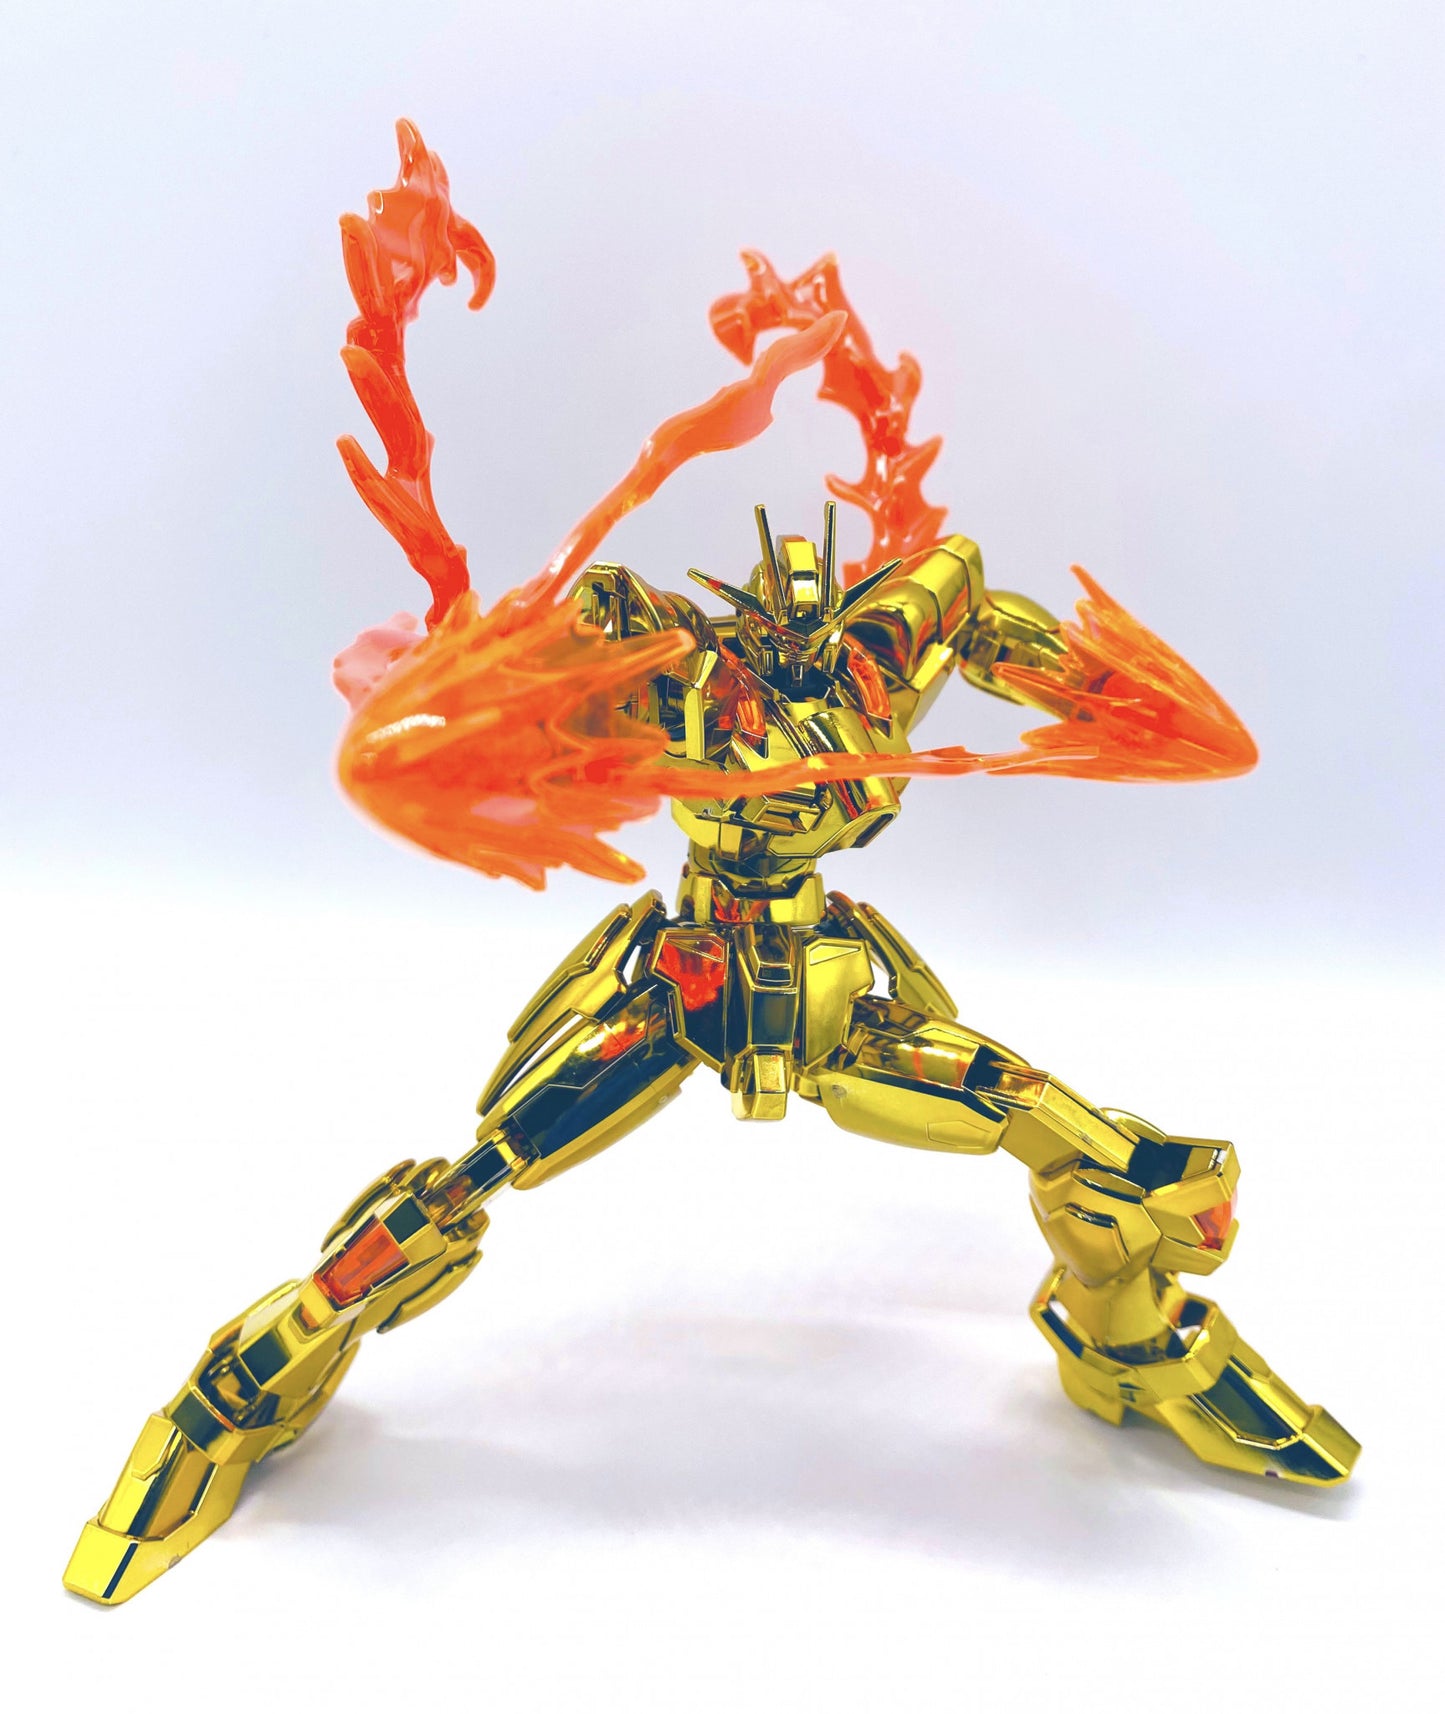 P-Bandai / Limited - HGBF Build Burning Gundam (Gold Ver.) - PLUS 1/48 Scale Build Burning Gundam Head Display Base!